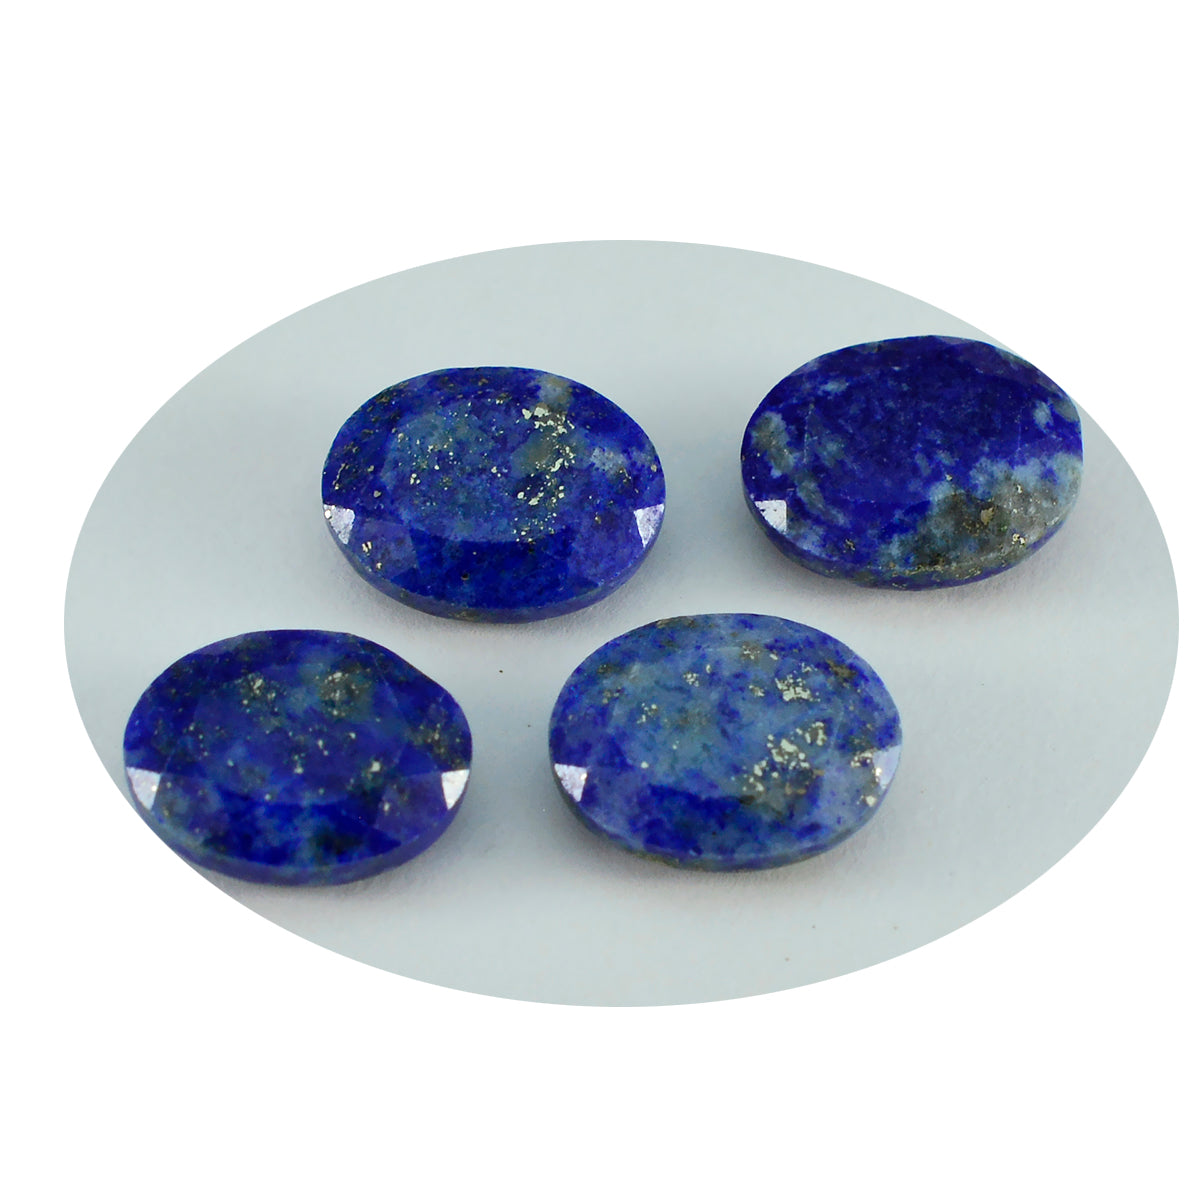 Riyogems 1PC Natural Blue Lapis Lazuli Faceted 8x10 mm Oval Shape excellent Quality Loose Gem